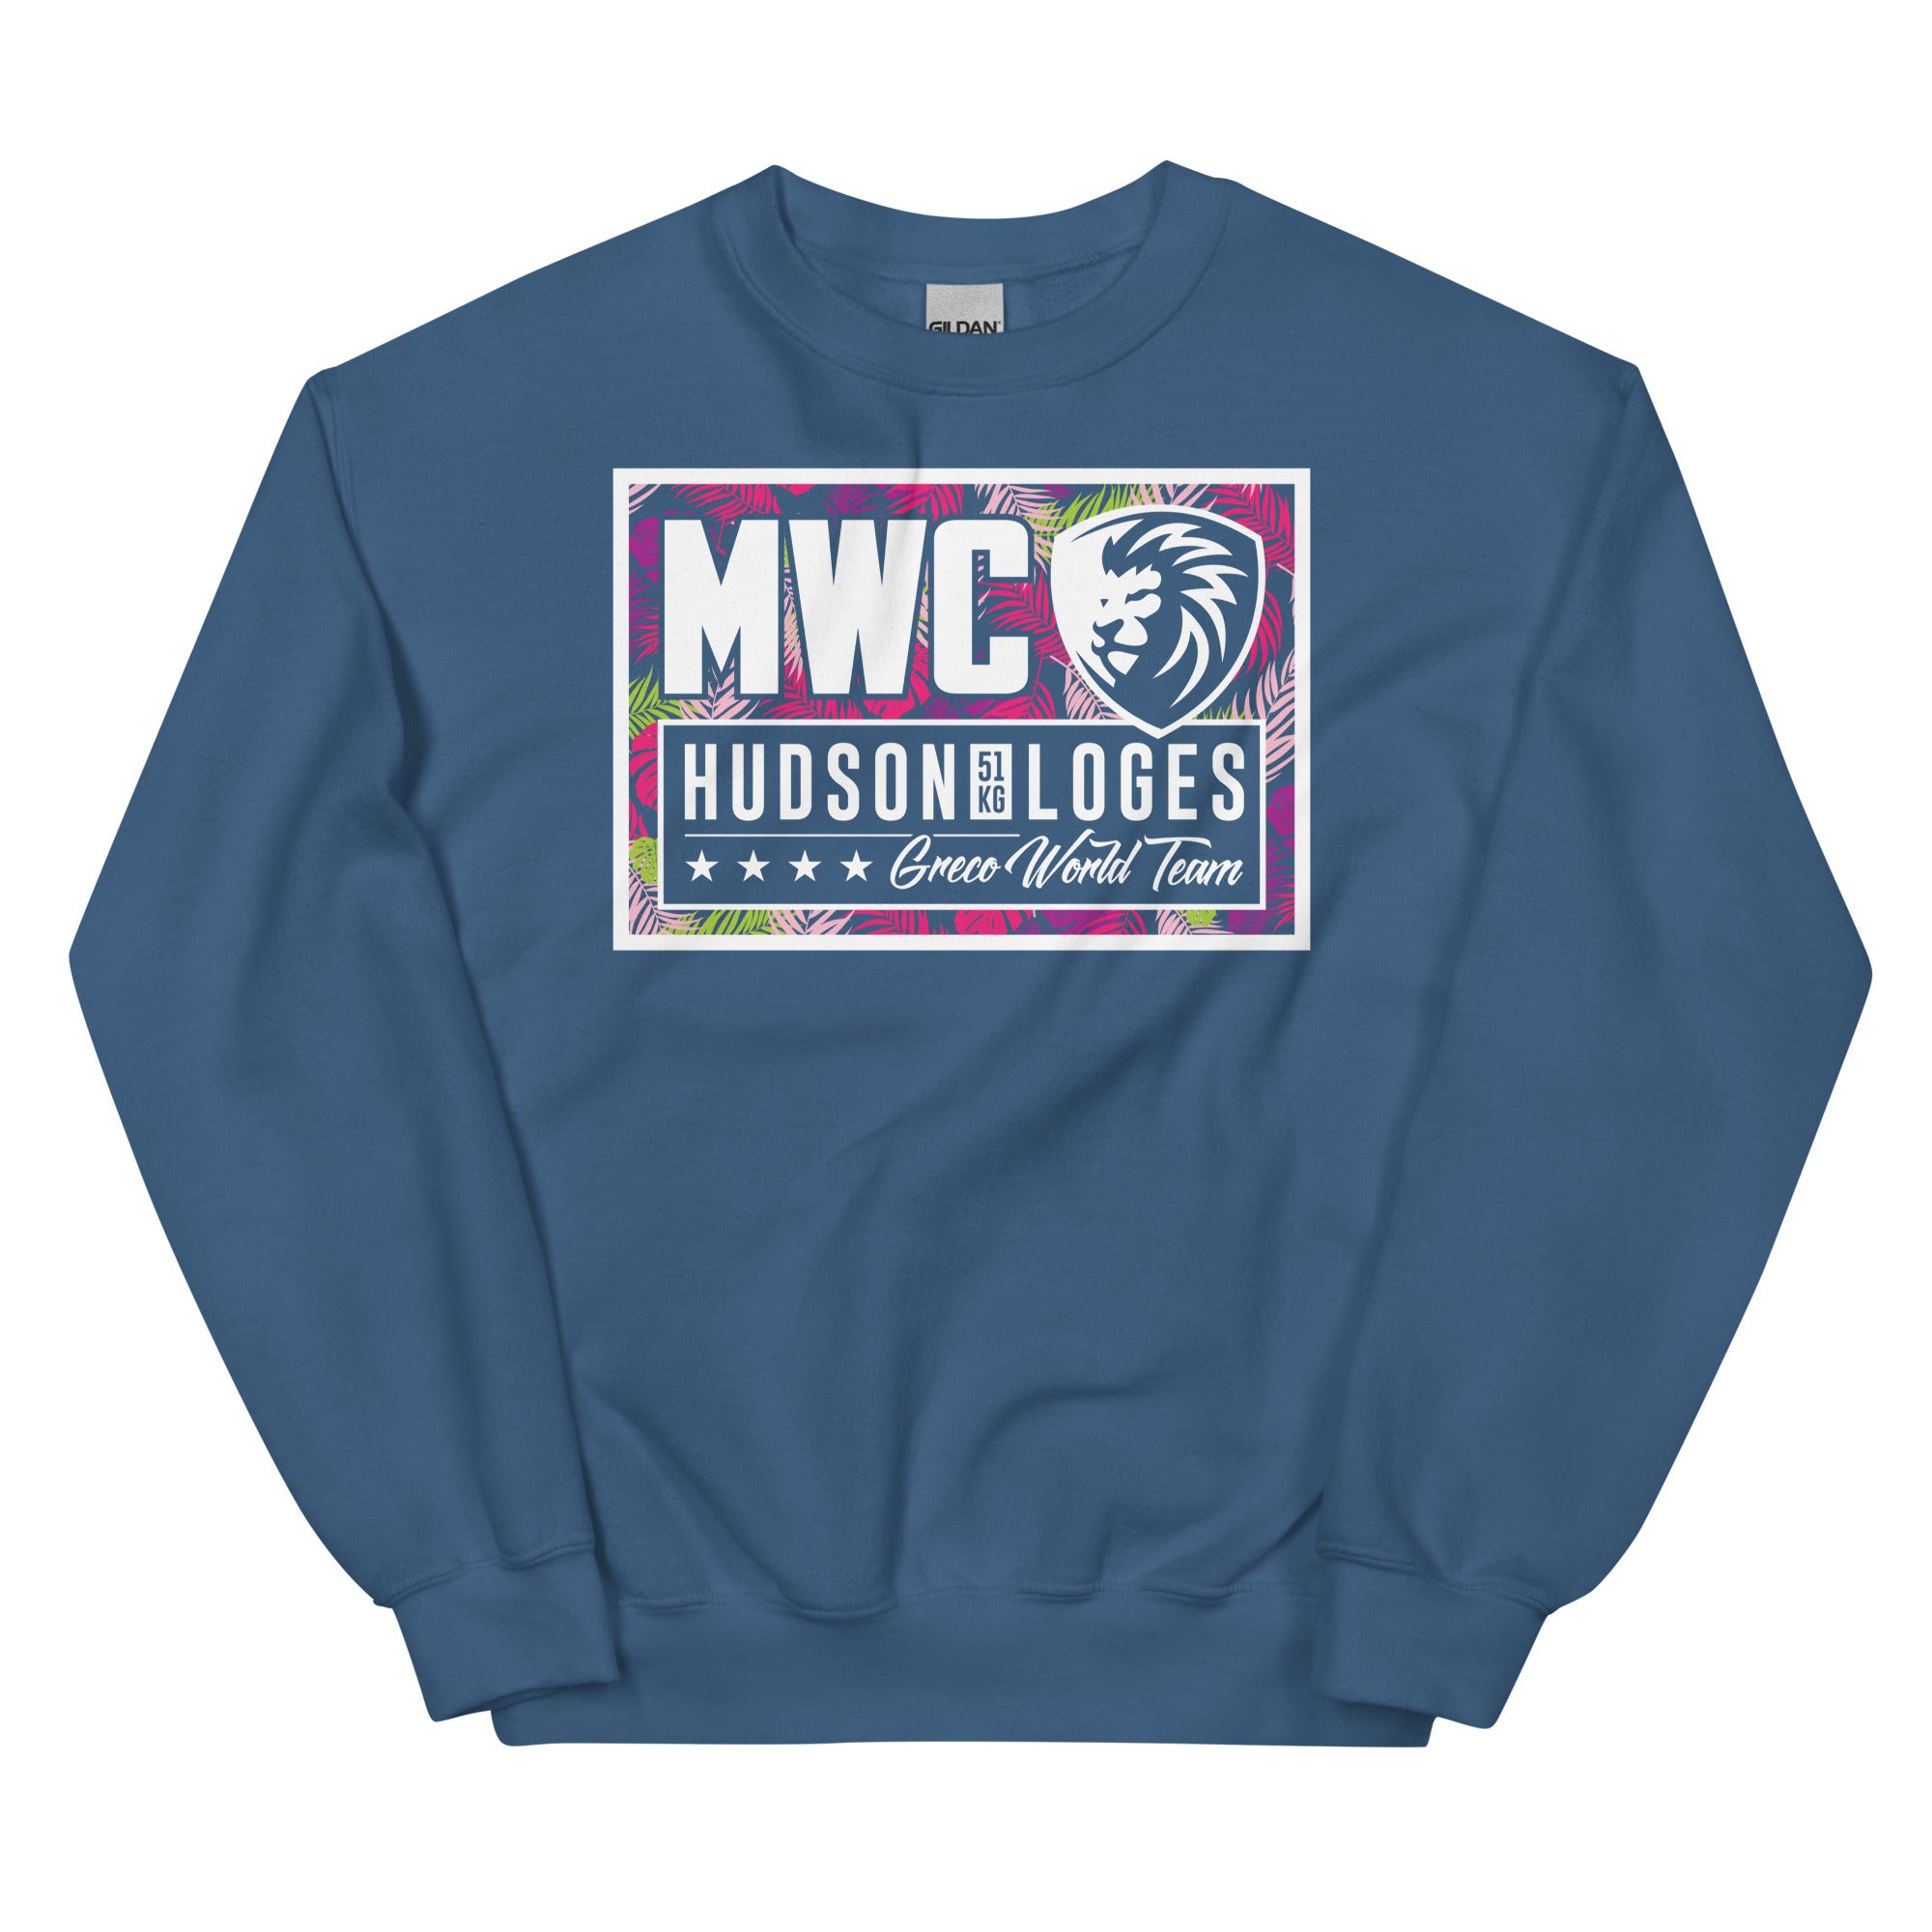 Hudson Loges - MWC Unisex Crew Neck Sweatshirt